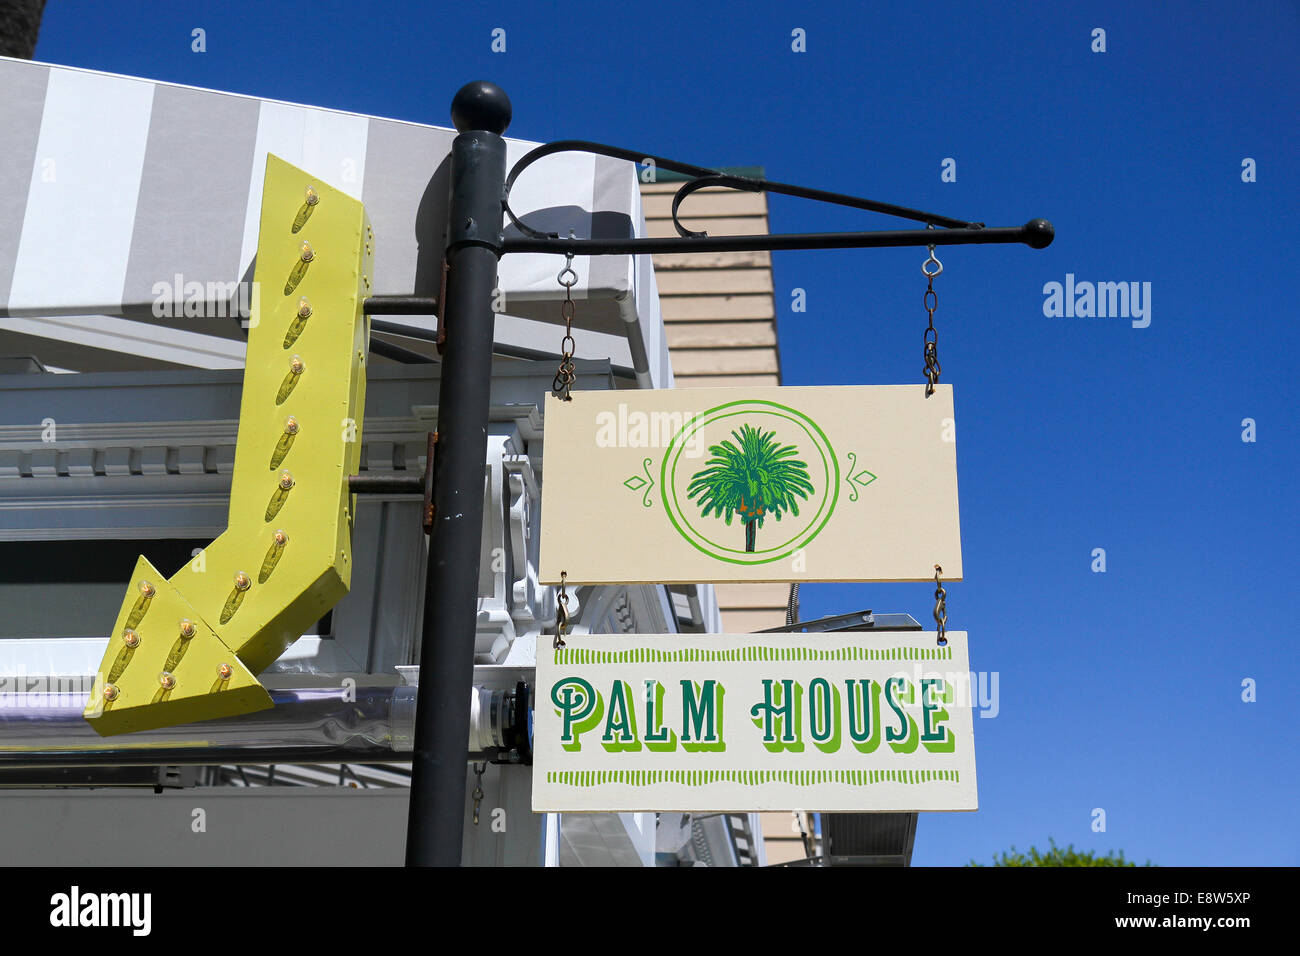 Sign for Palm House restaurant, Cow Hollow neighborhood, San Francisco Stock Photo